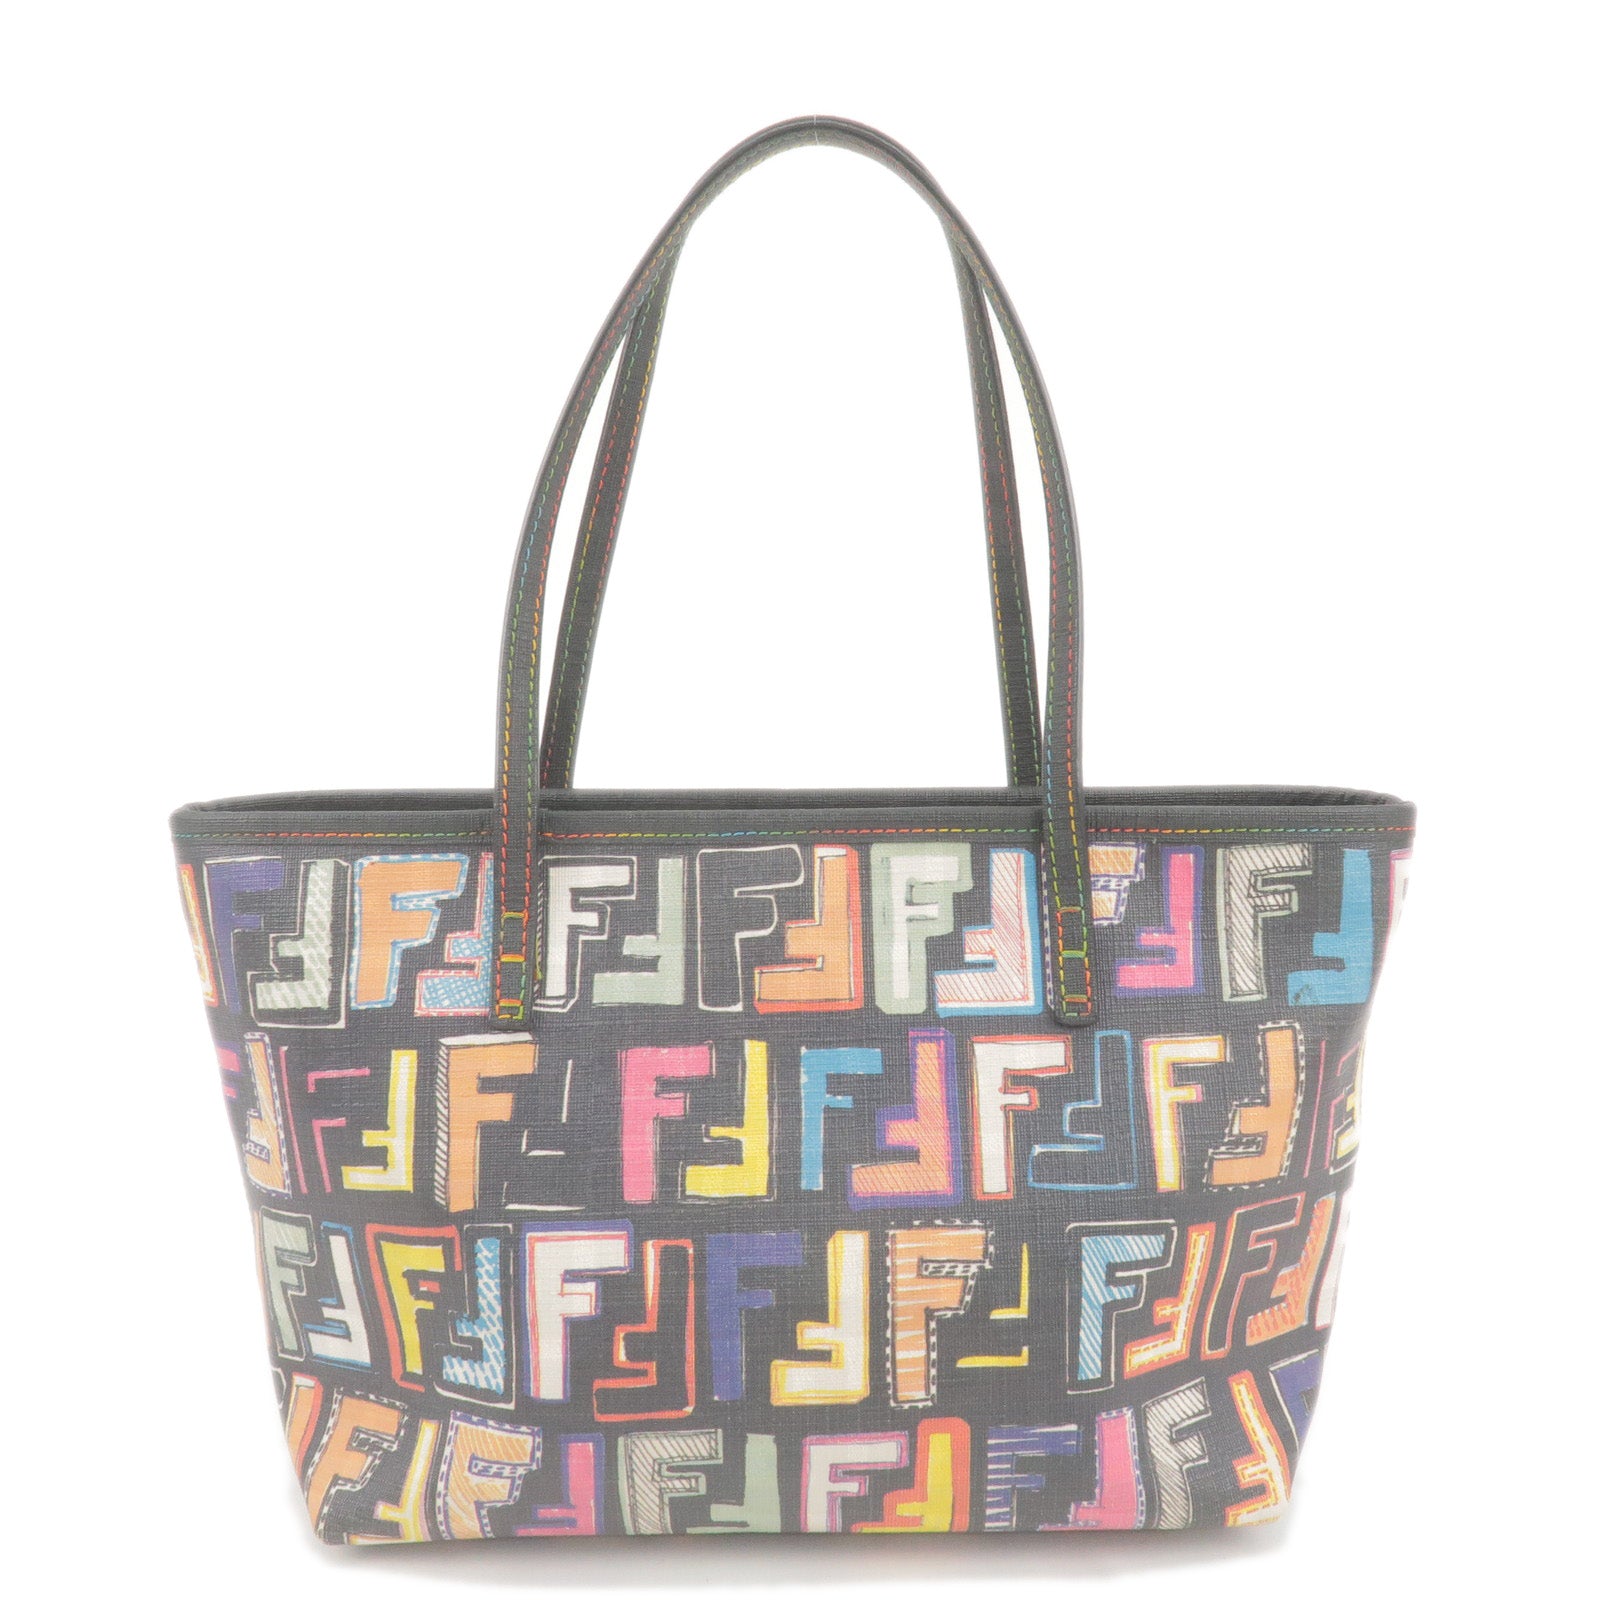 Fendi FENDI Zucca tote bag handbag ladies